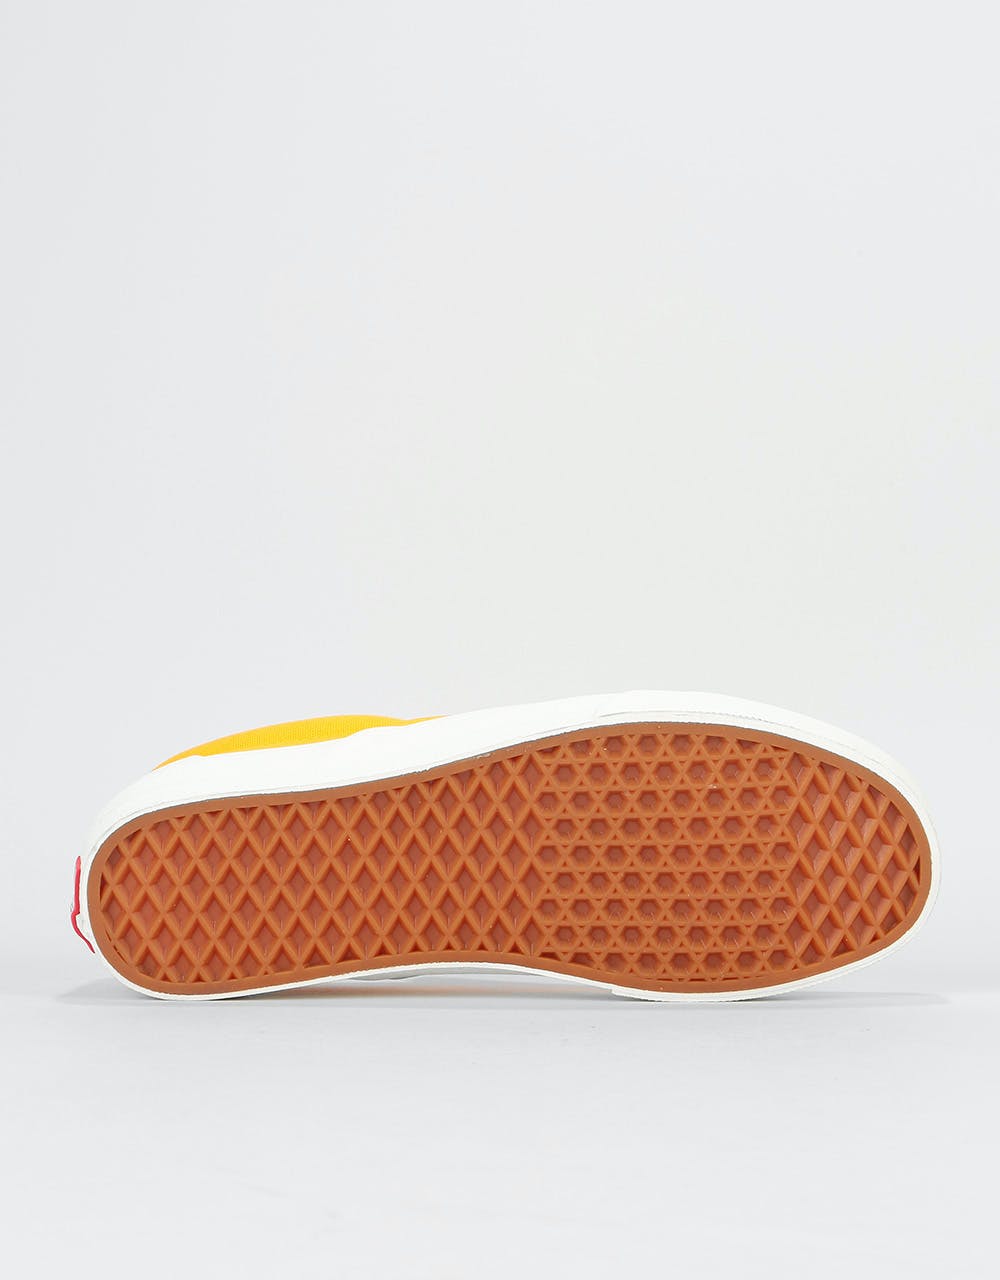 Vans Classic Slip-On 138 Skate Shoes - Zinnia